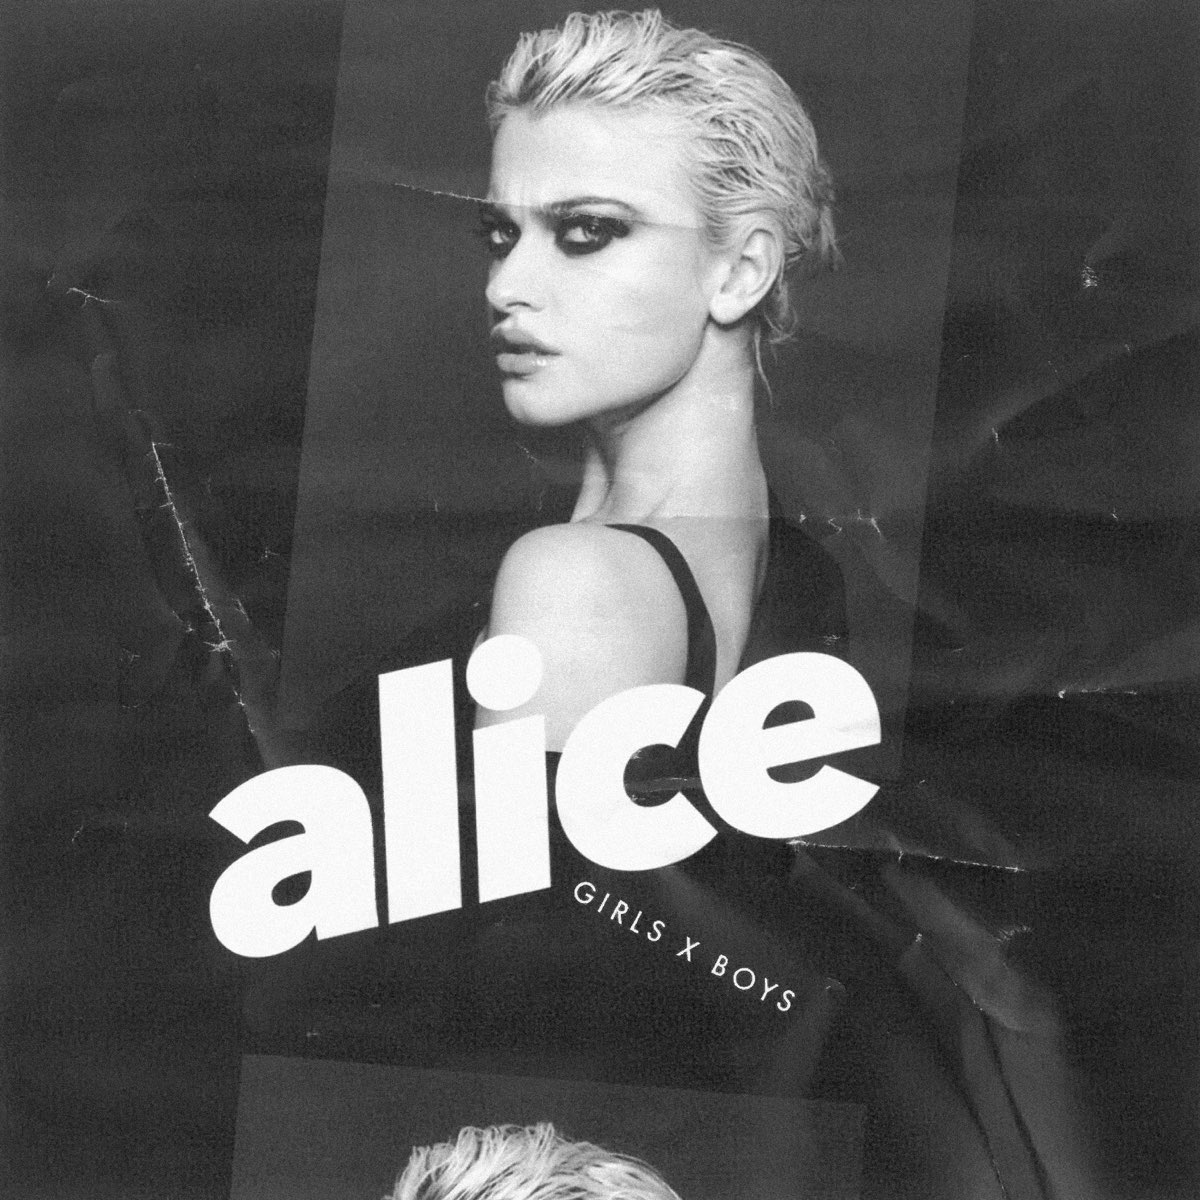 Алиса девушки песня. Алиса бойс фото. Элис дэнс. Chater girls. Alice DJ обложка.